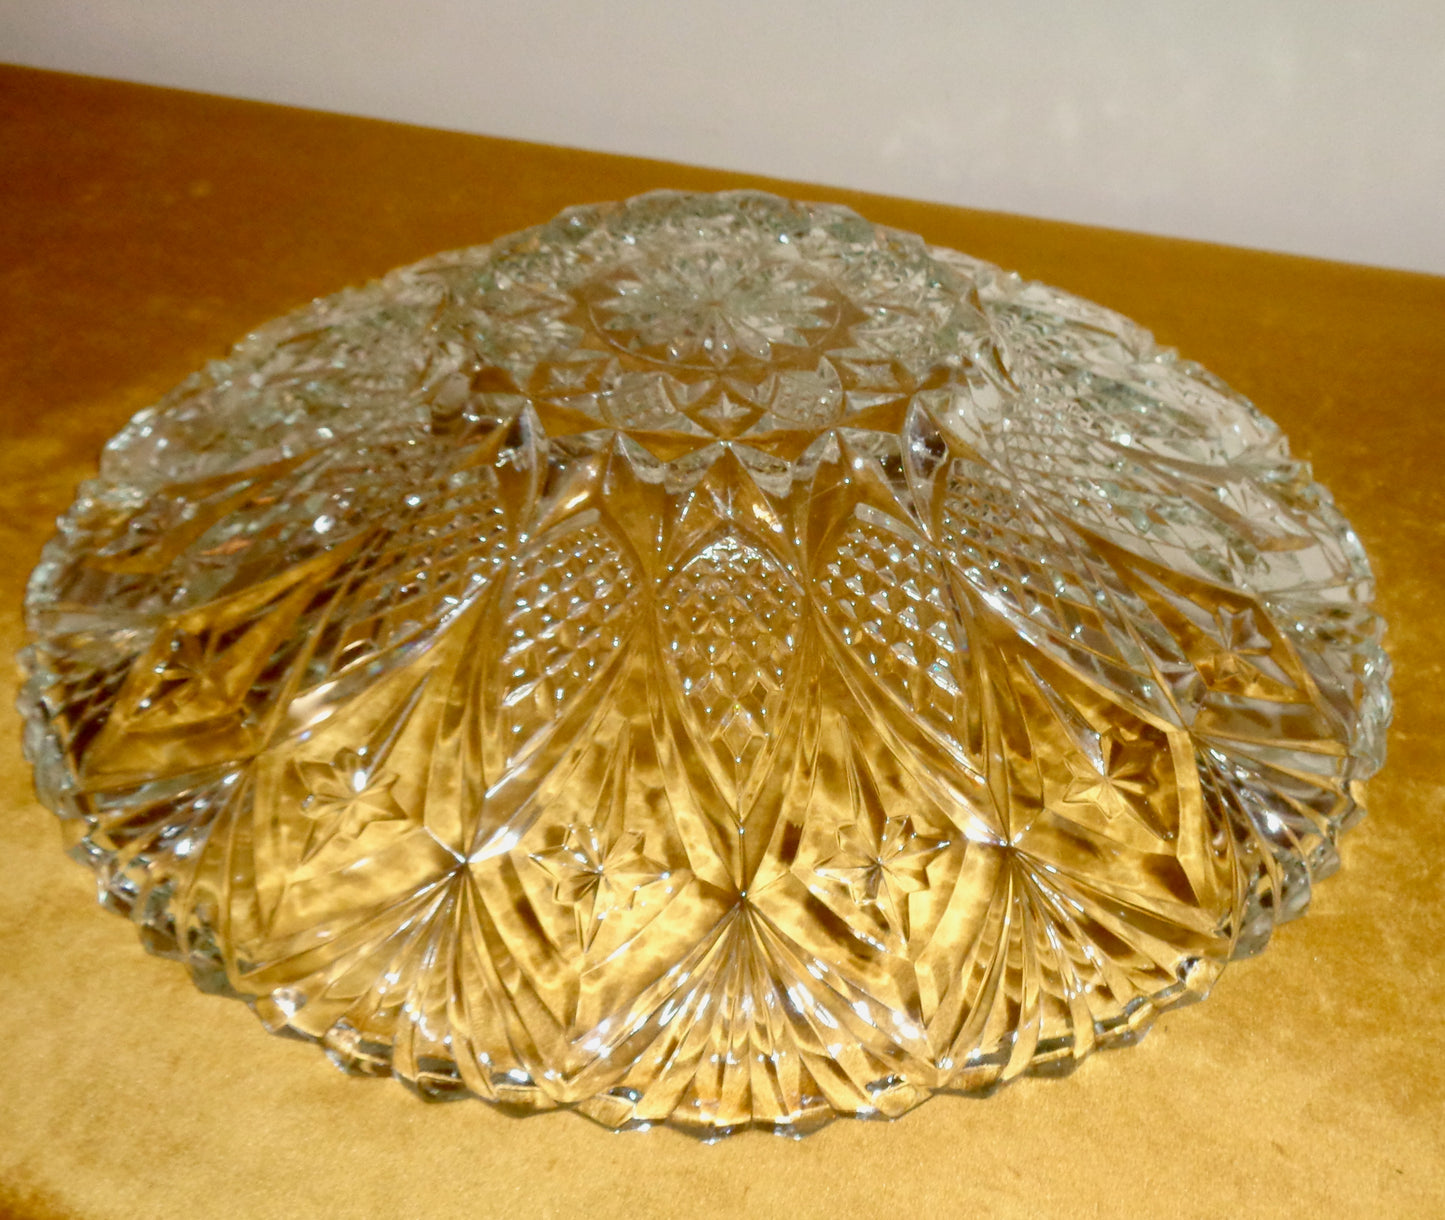 Vintage 13 Inch Circular Glass Fruit Dish Table Decoration By Luxhem De Veropa